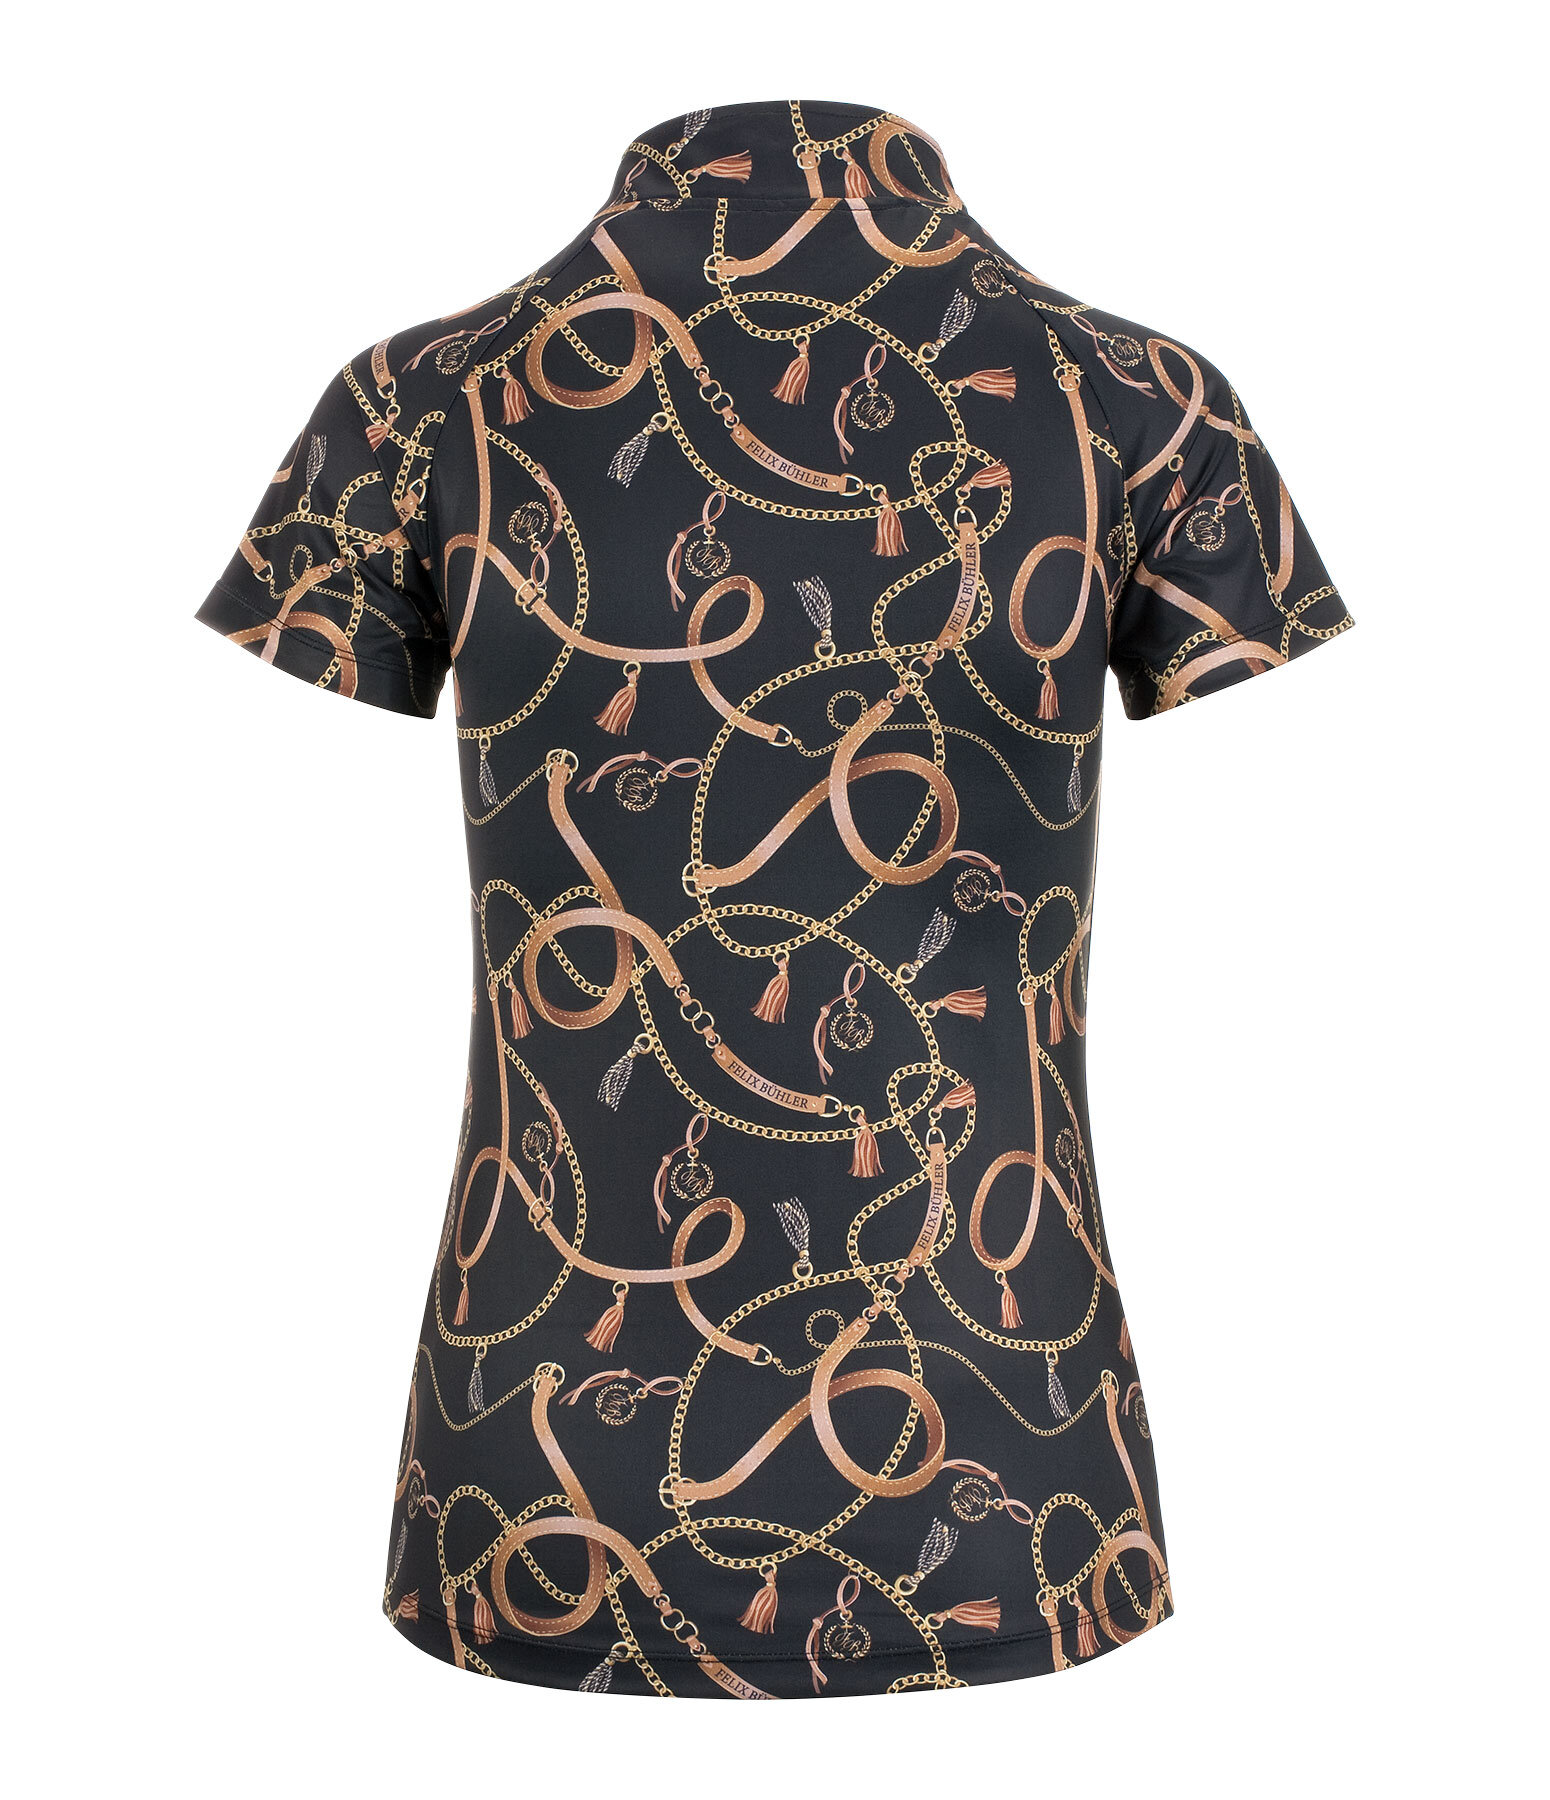 T-shirt funzionale con zip Callie